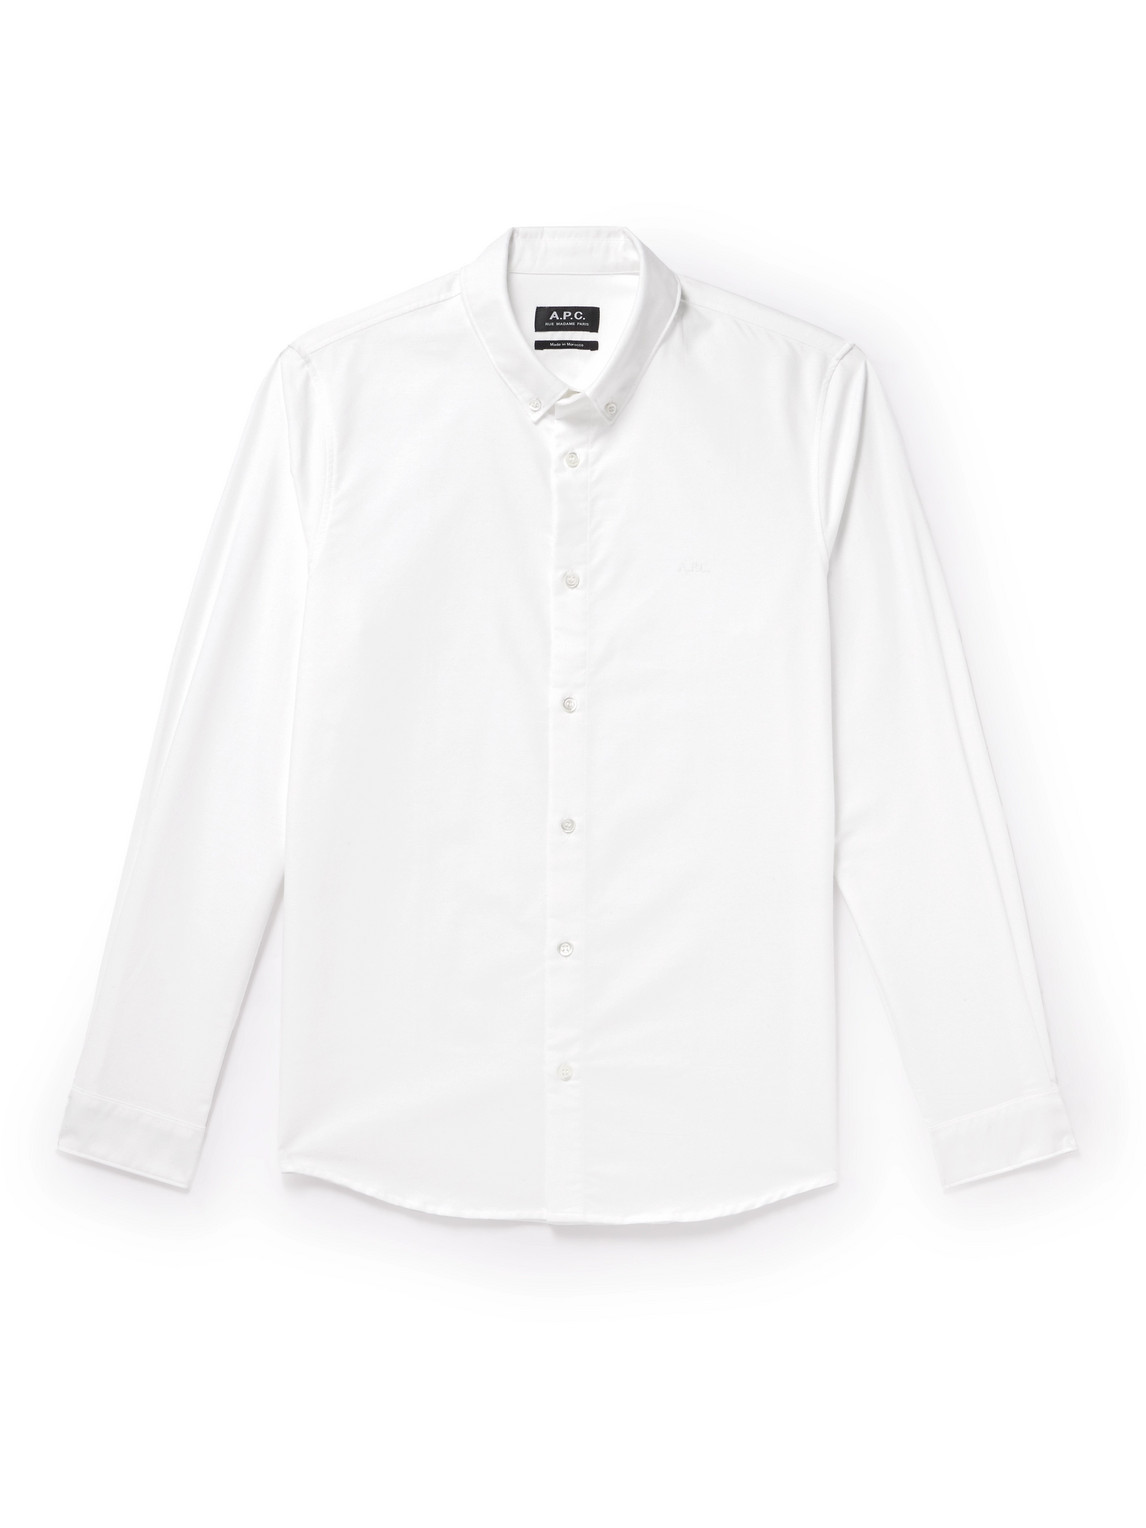 A.P.C. - Greg Button-Down Collar Logo-Embroidered Cotton Oxford Shirt - Men - White - S von A.P.C.